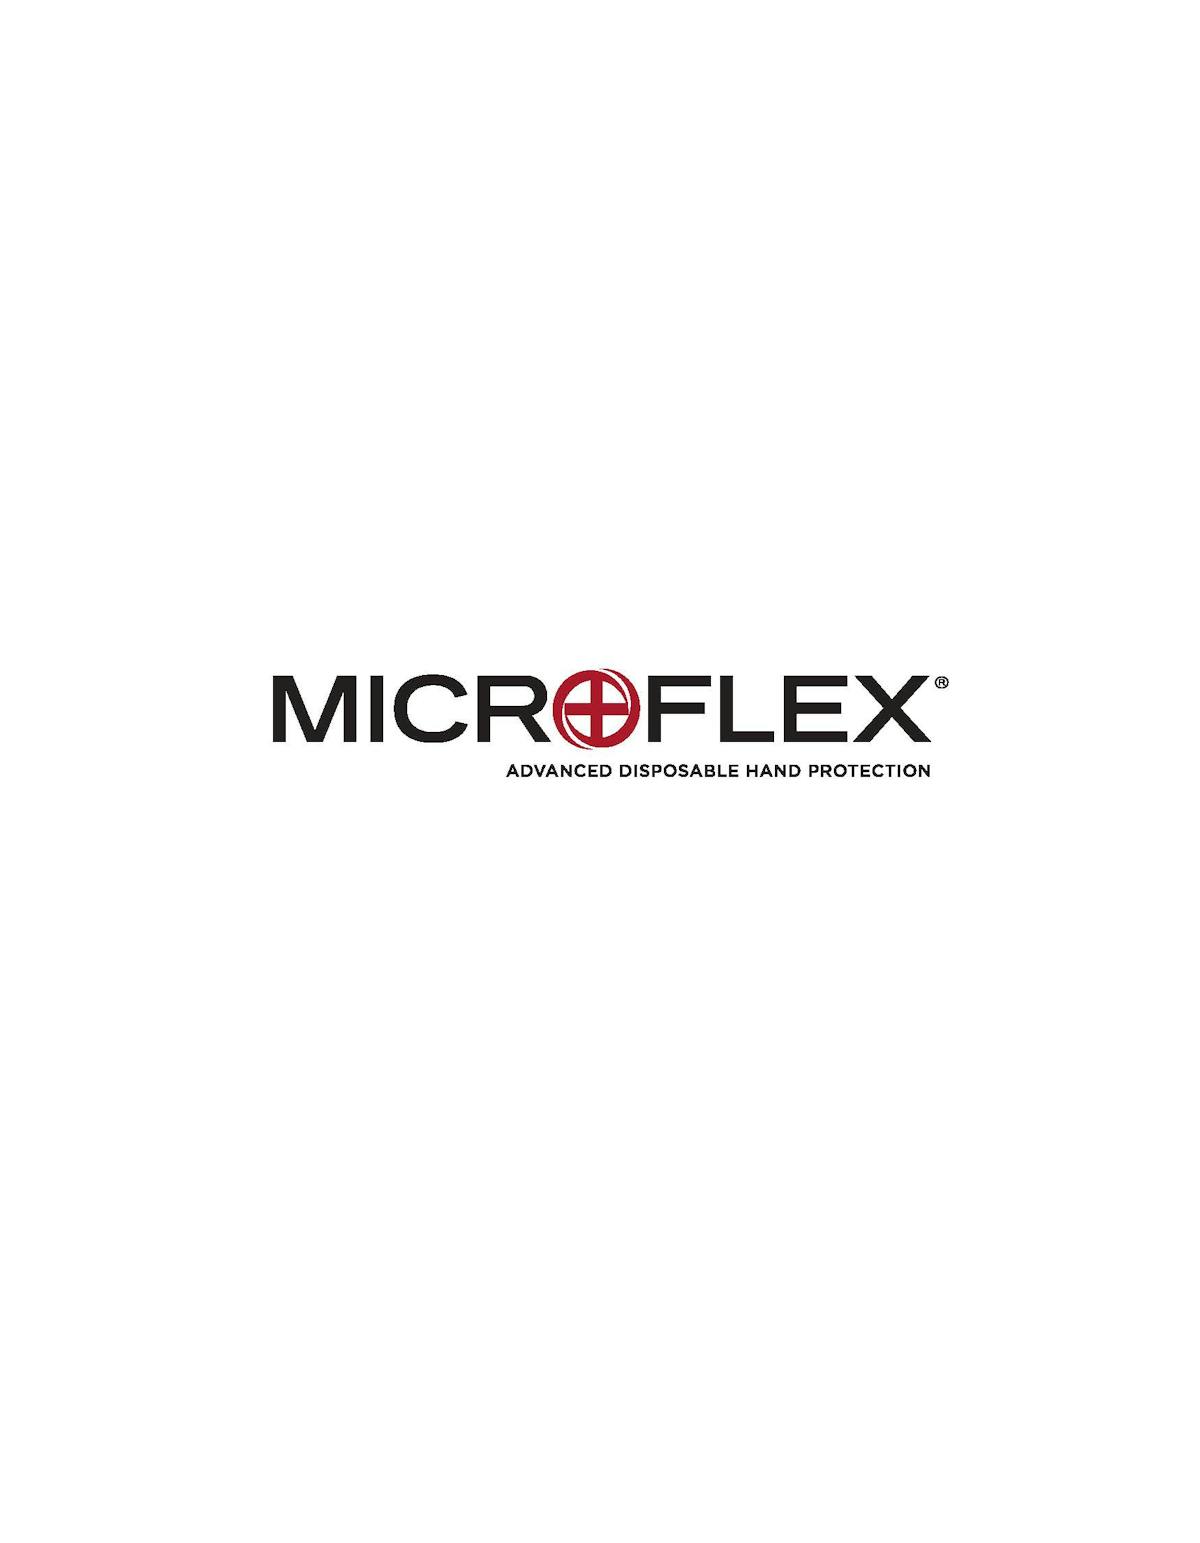 Micro Flex Logo